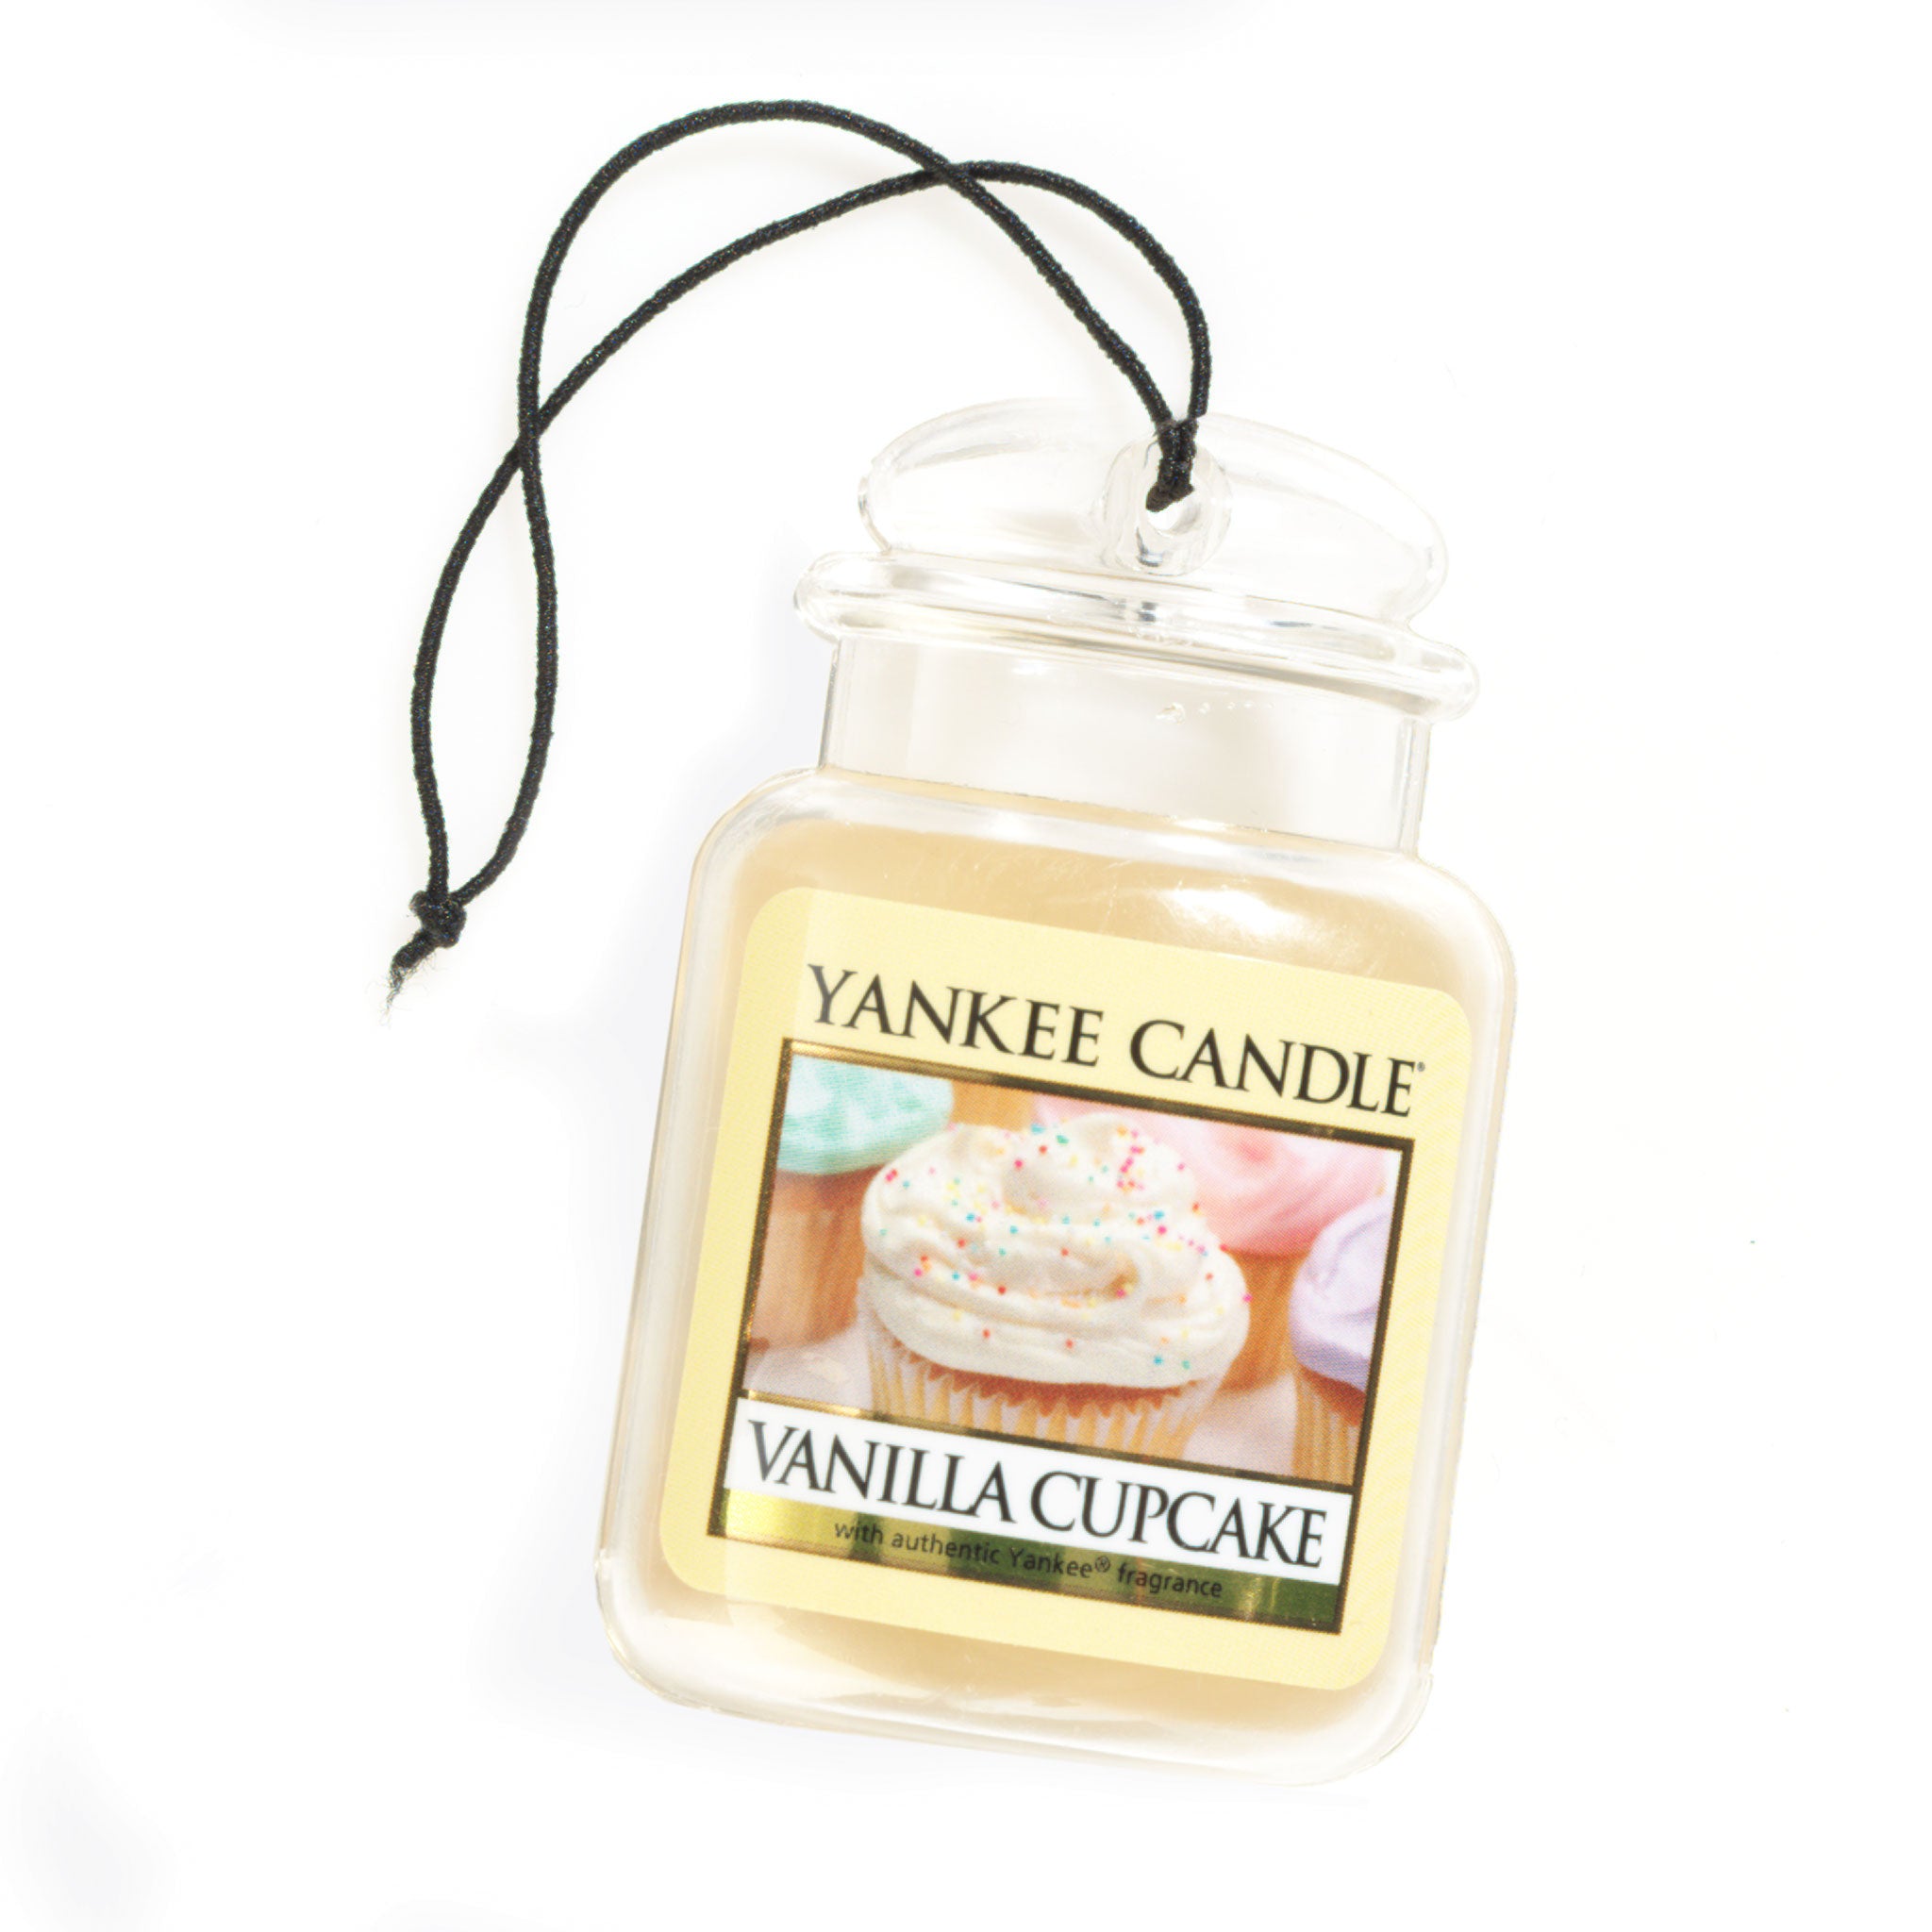 VANILLA CUPCAKE -Yankee Candle- Car Jar Ultimate